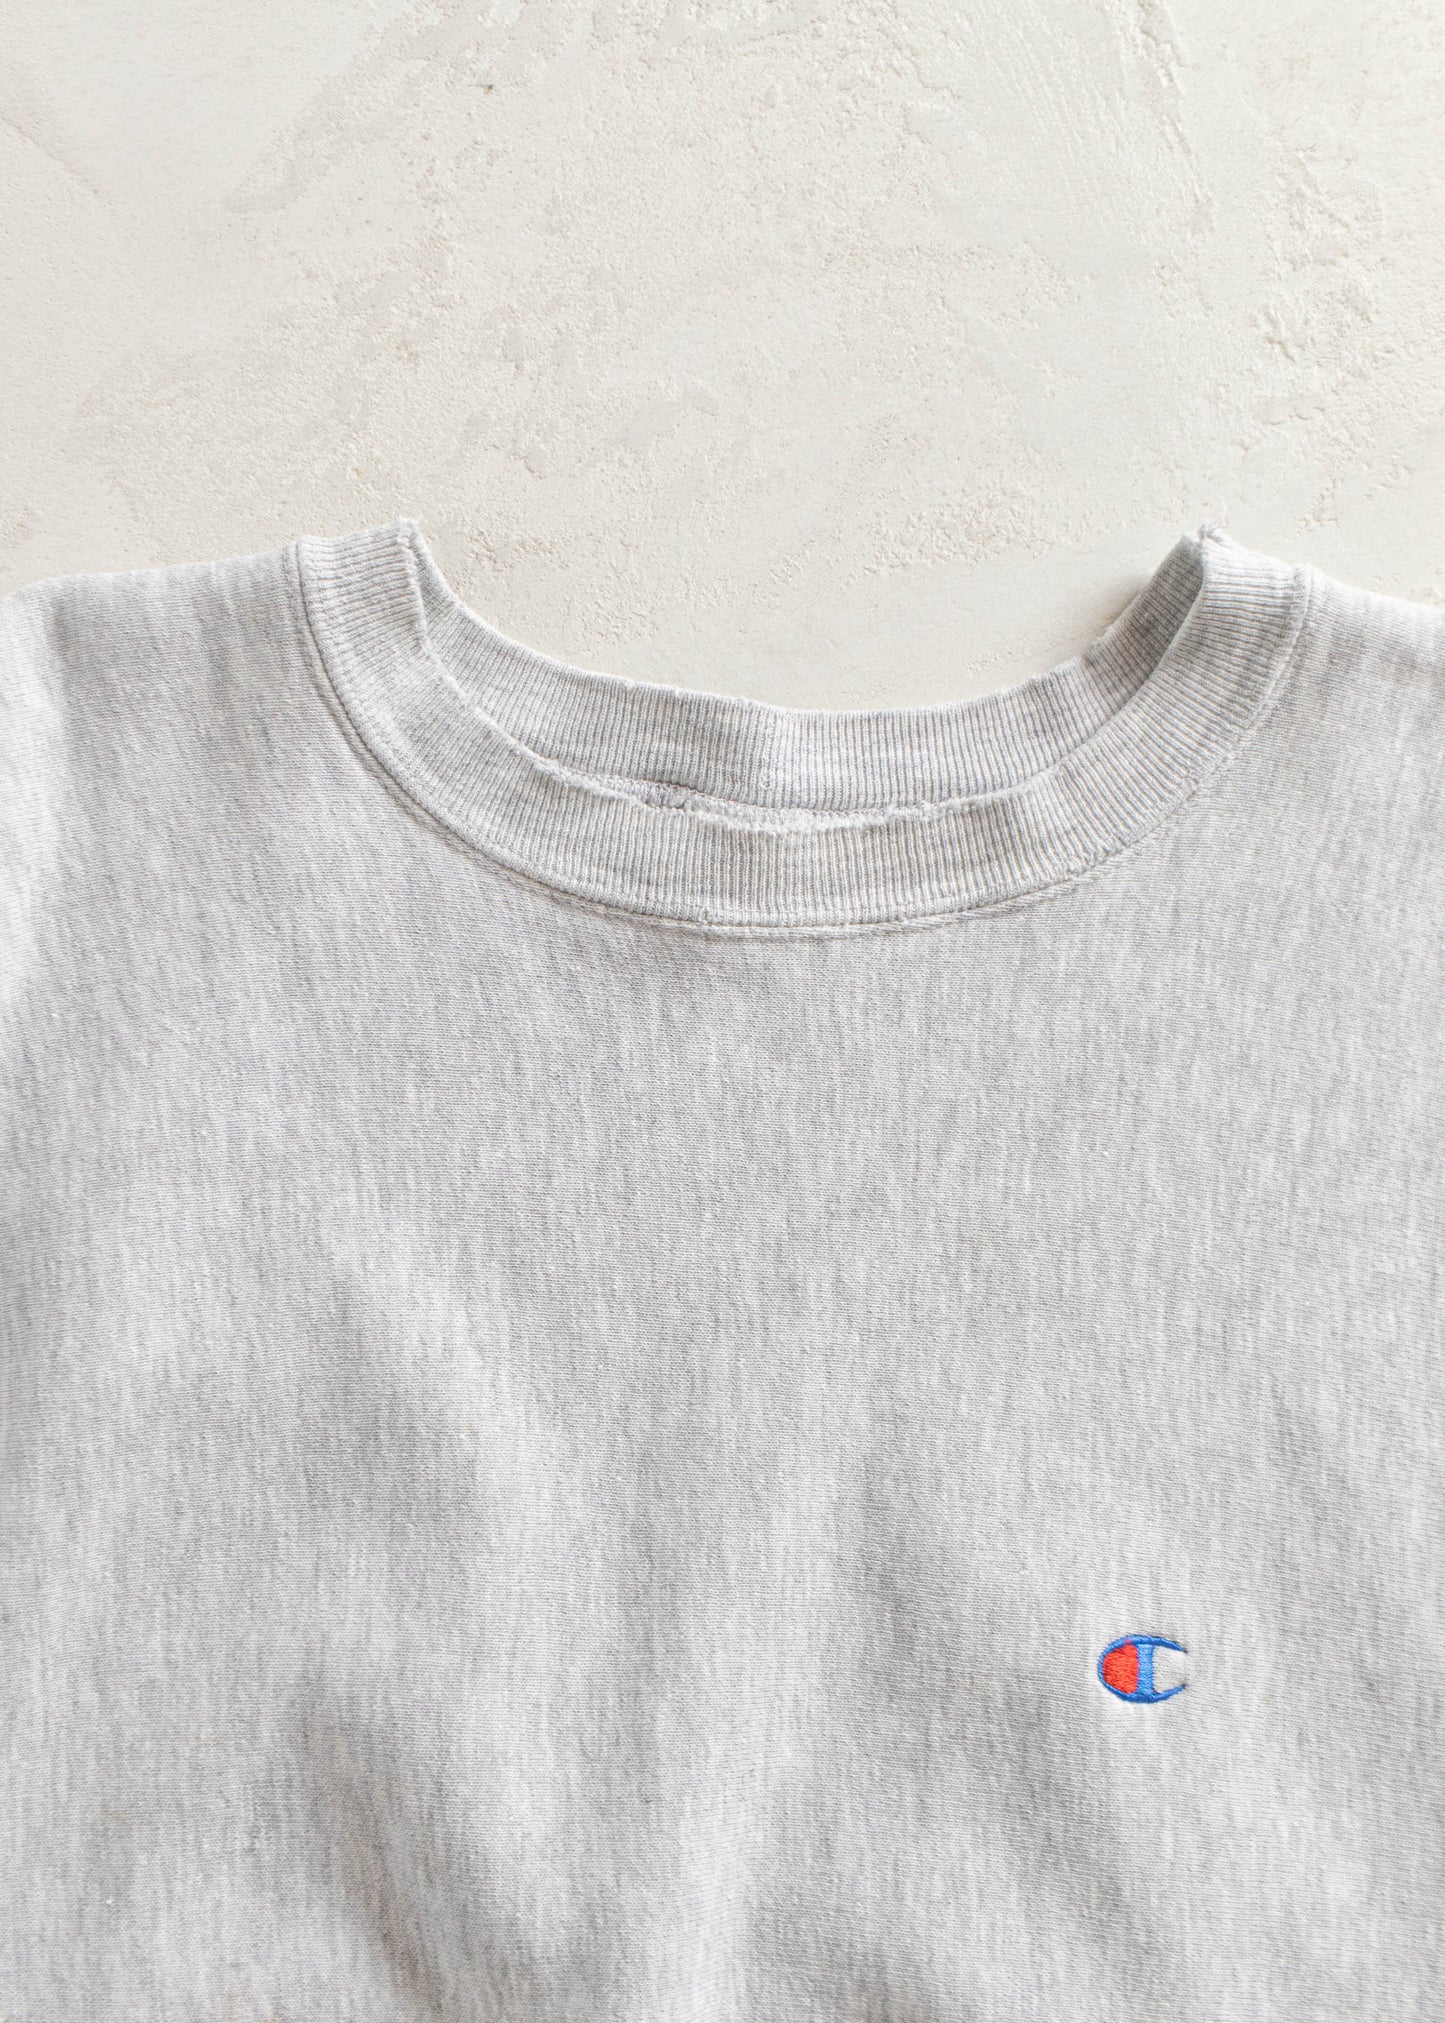 Vintage 1980s Champion Reverse Weave Warmup Grey Sweatshirt Size S/M